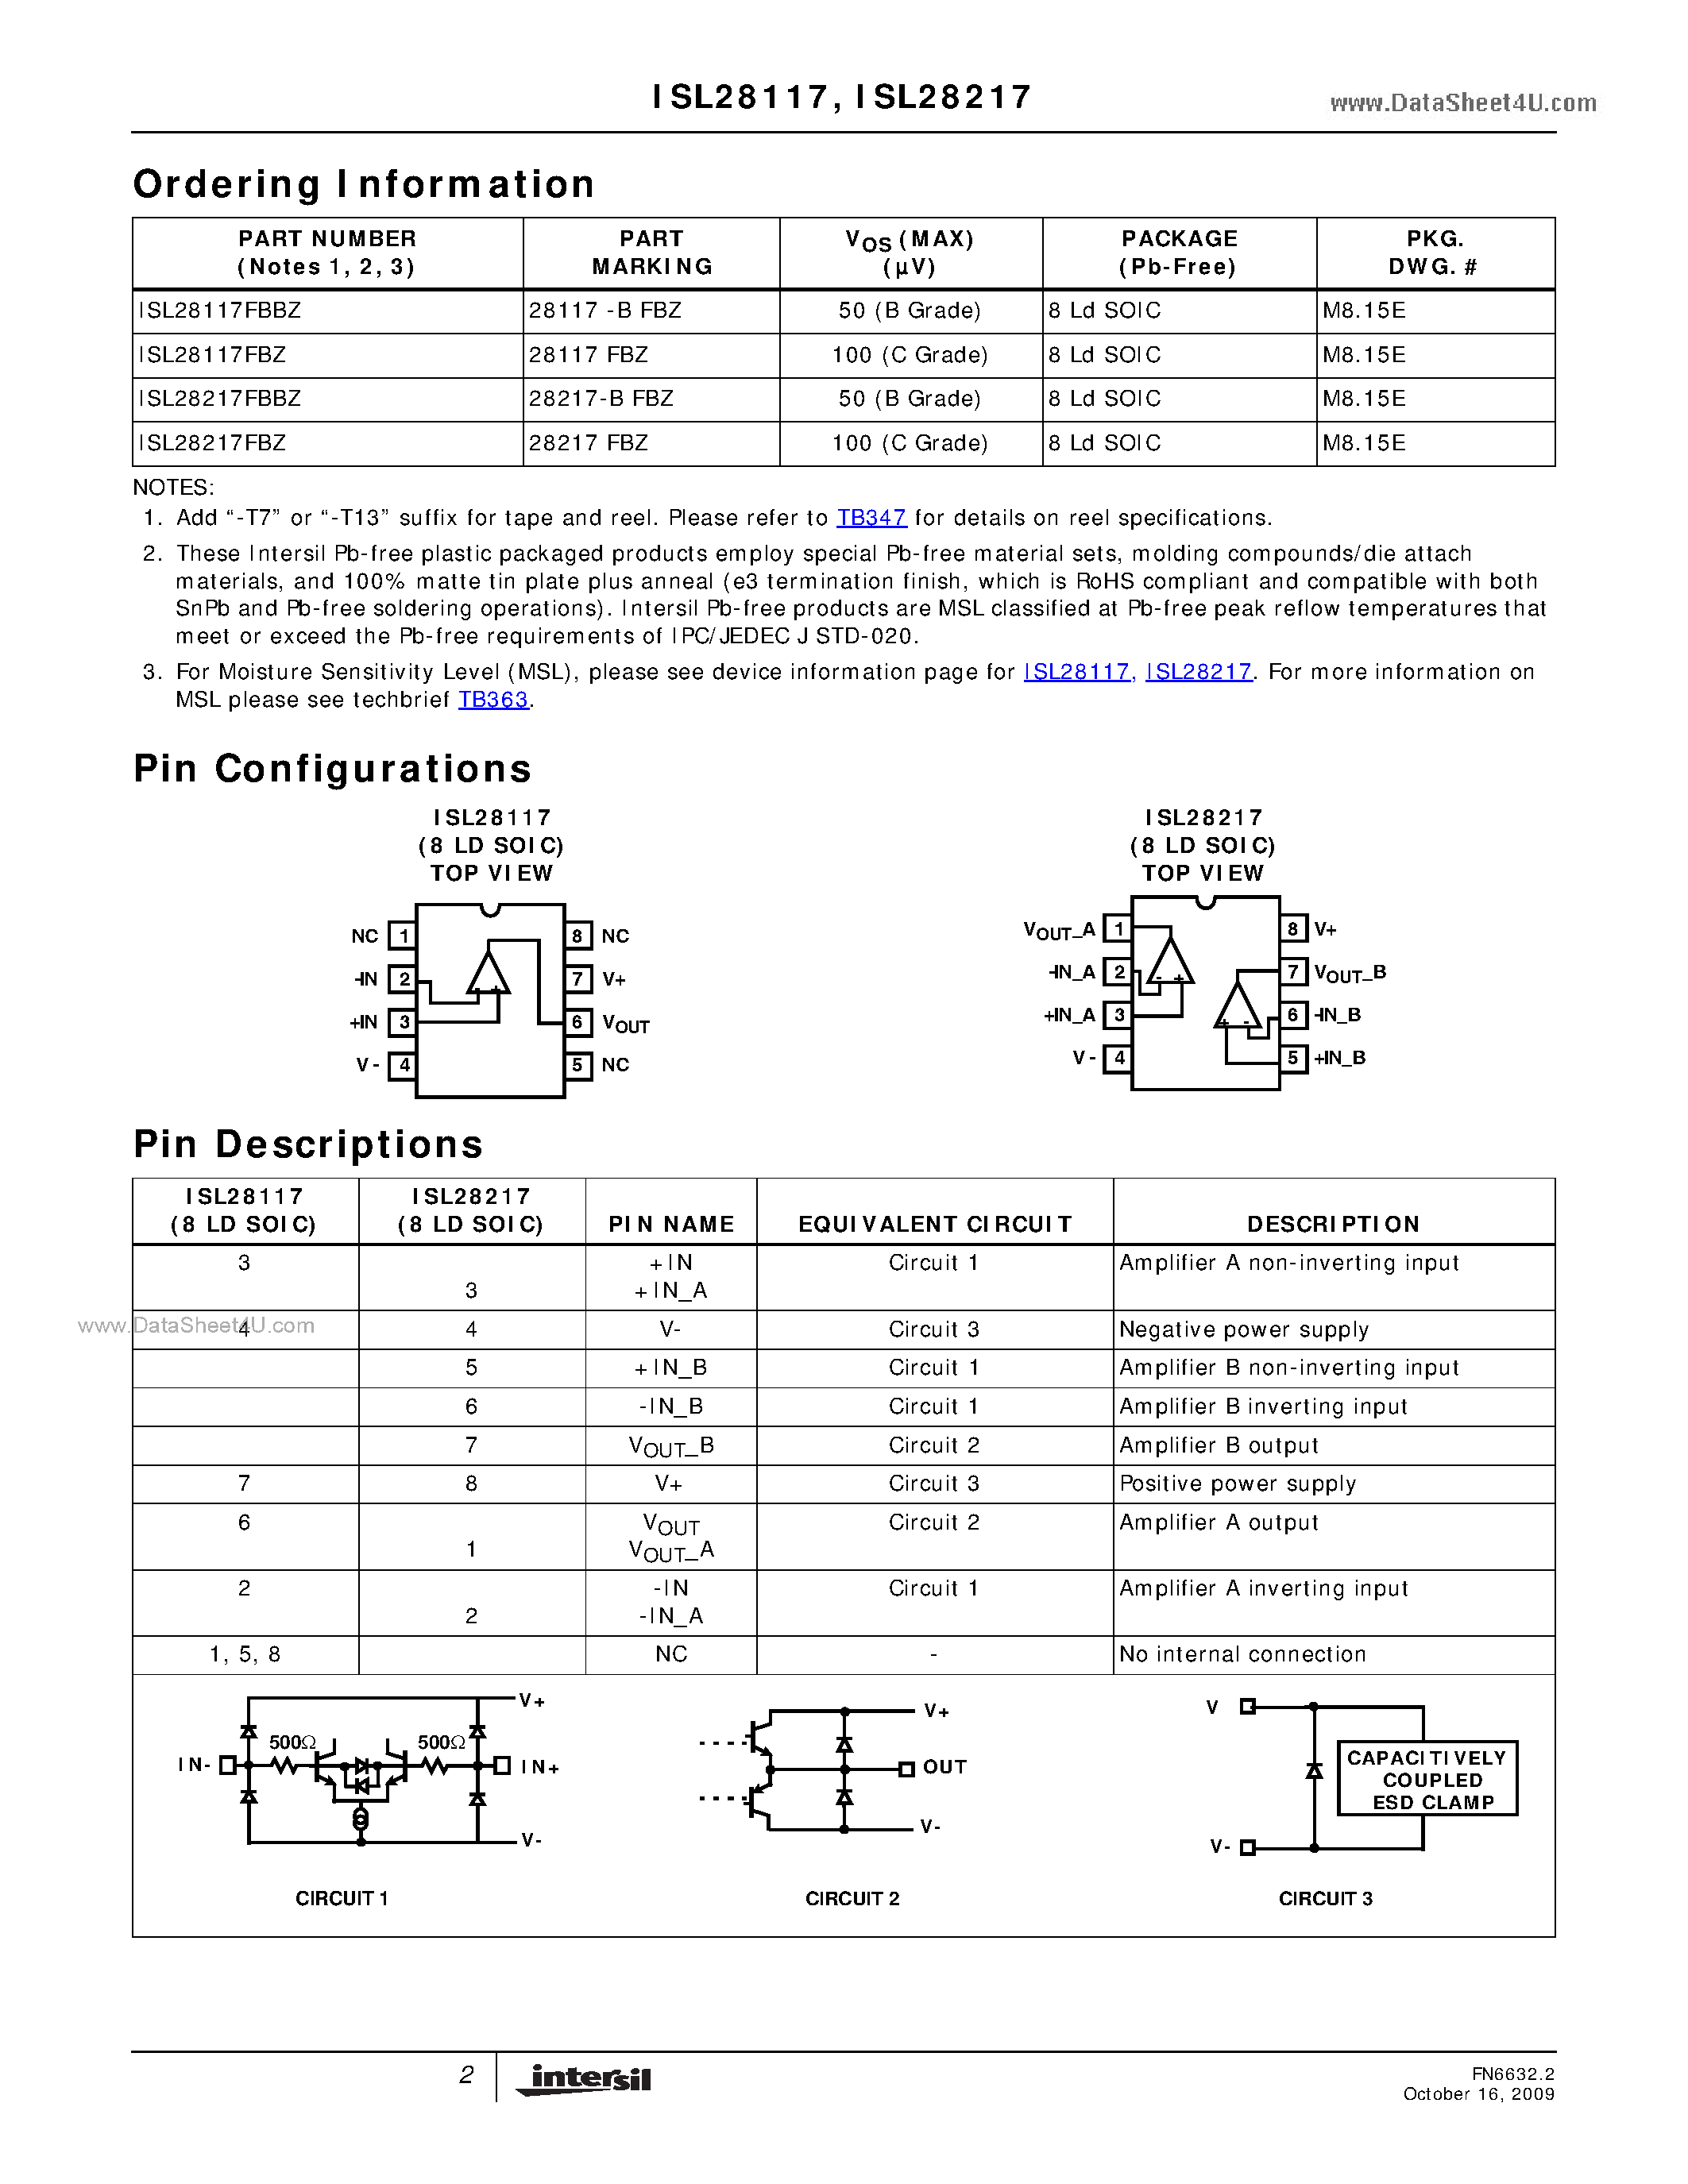 Даташит ISL28217 - (ISL28117 / ISL28217) 40V Precision Low Power Operational Amplifiers страница 2